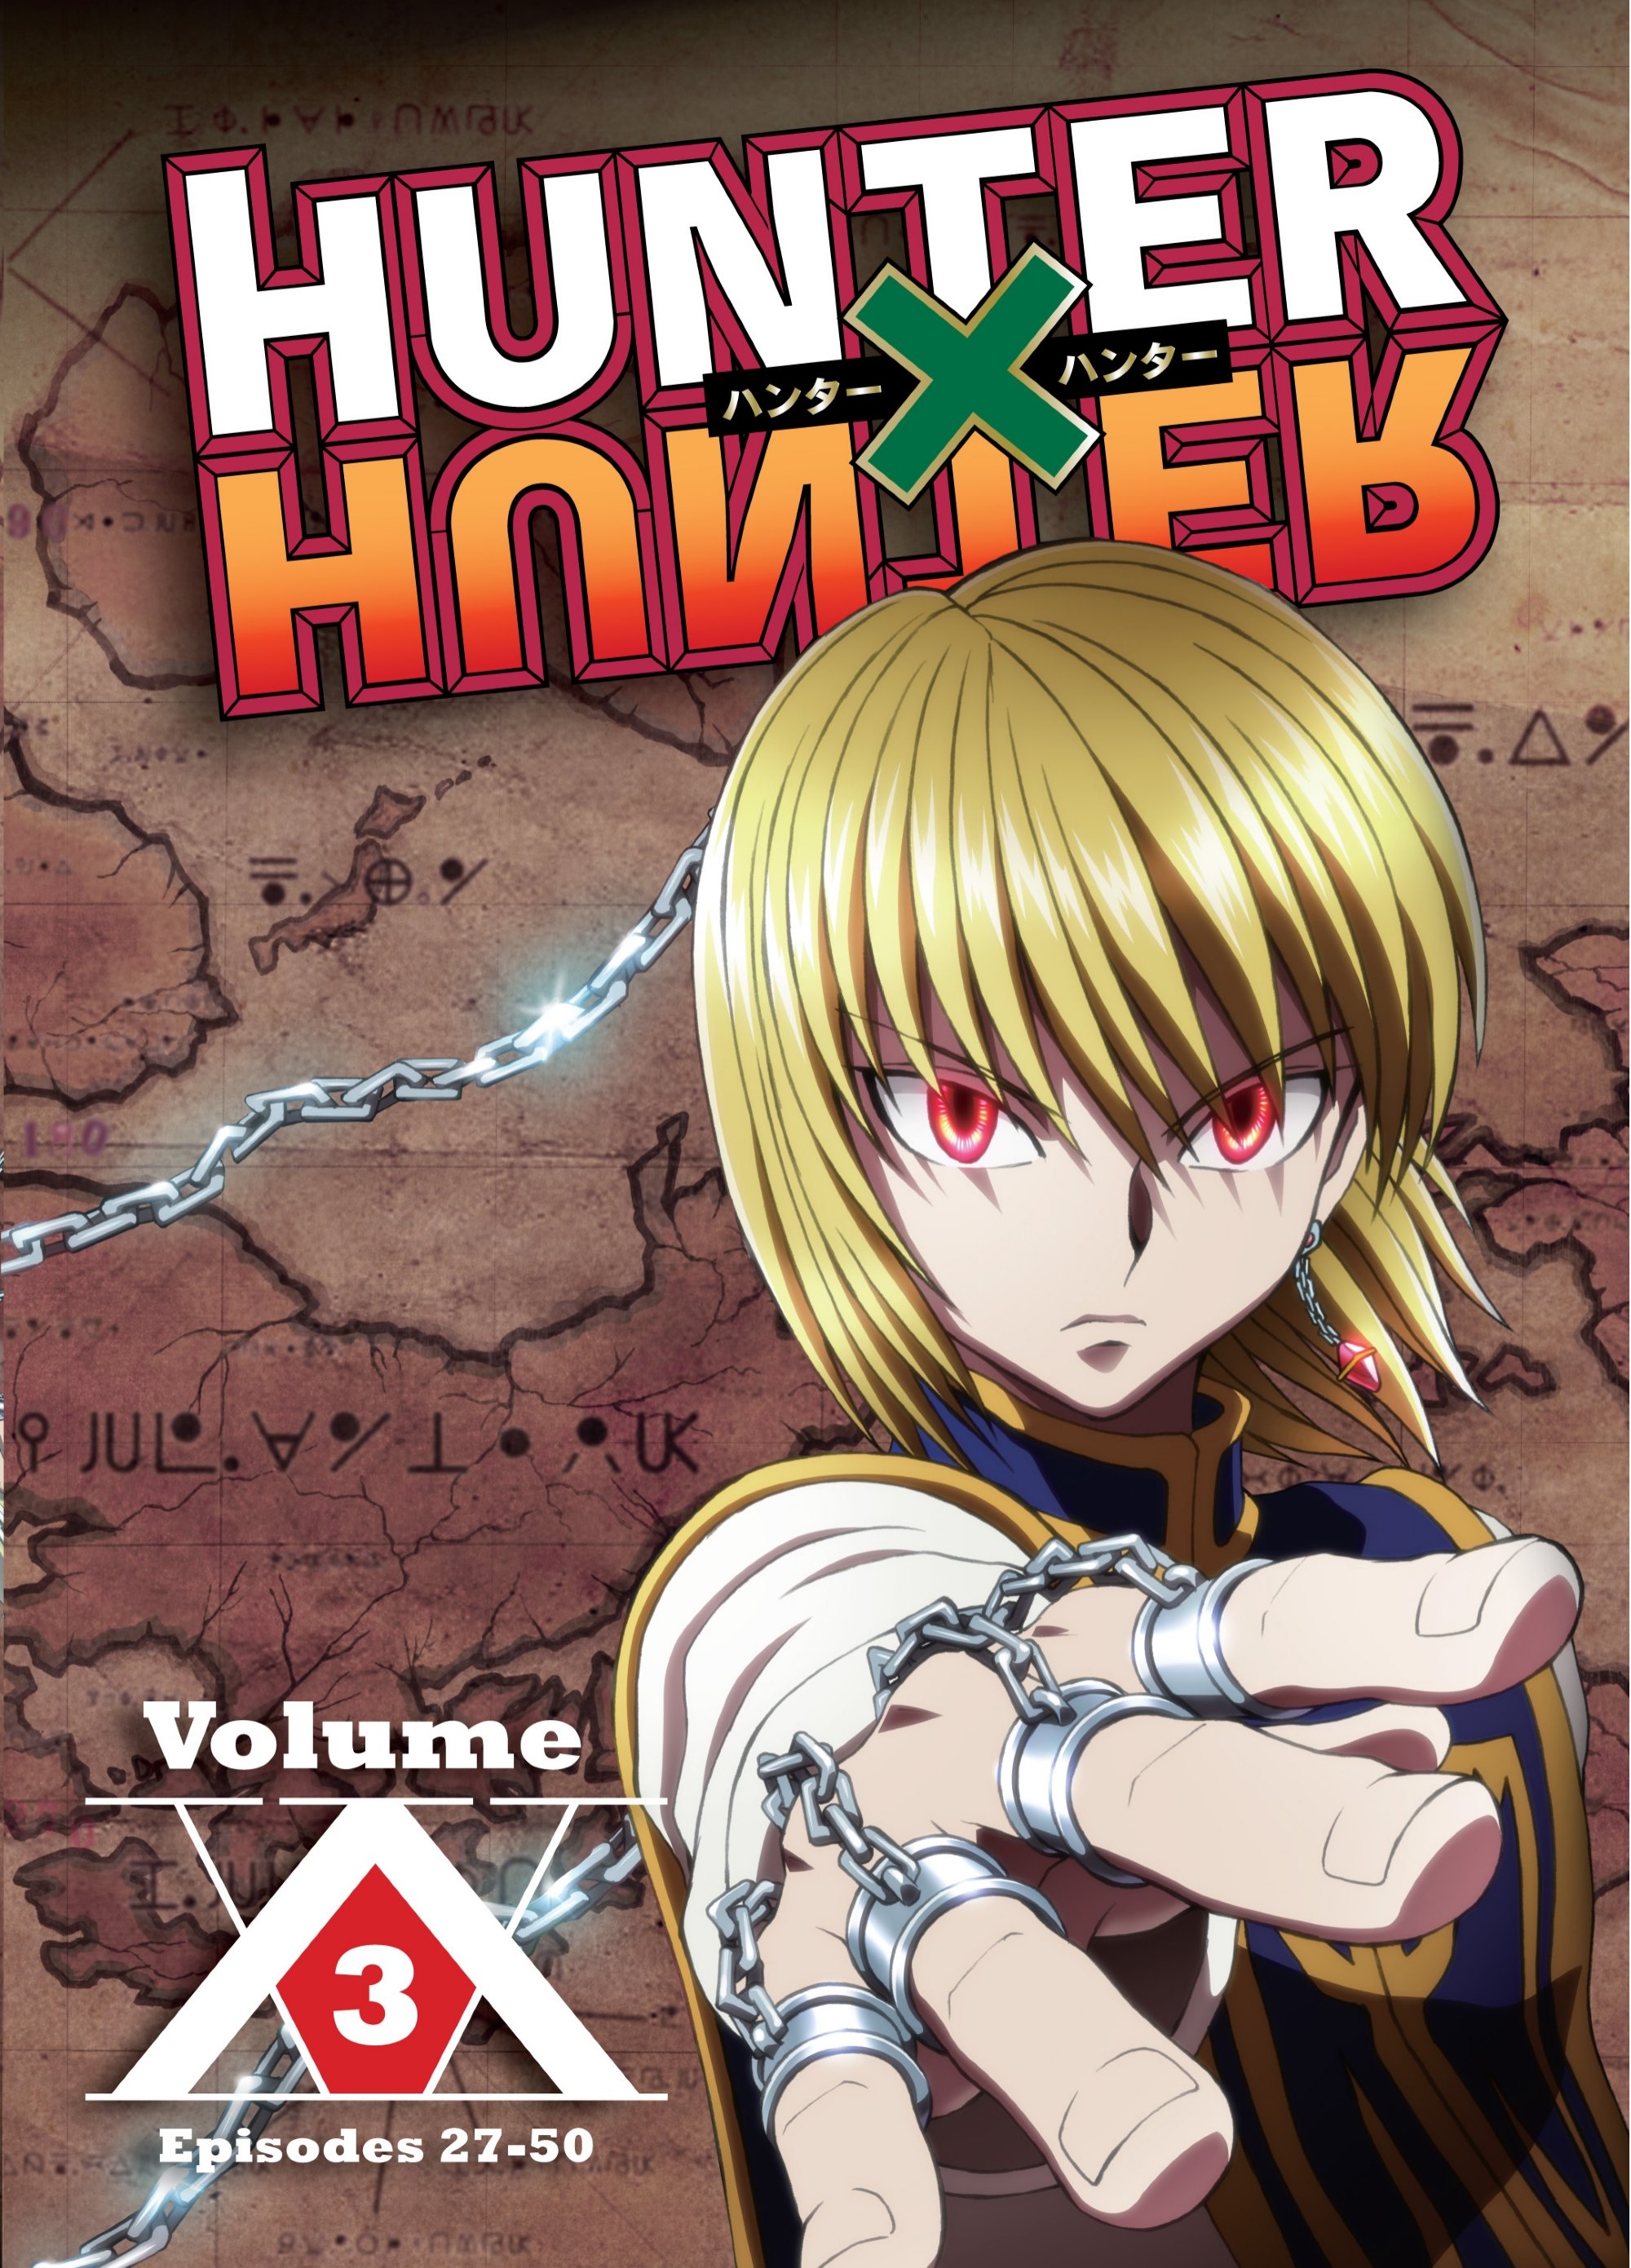 Best Buy: Hunter X Hunter: Set 1 [Blu-ray] [SteelBook] [Only